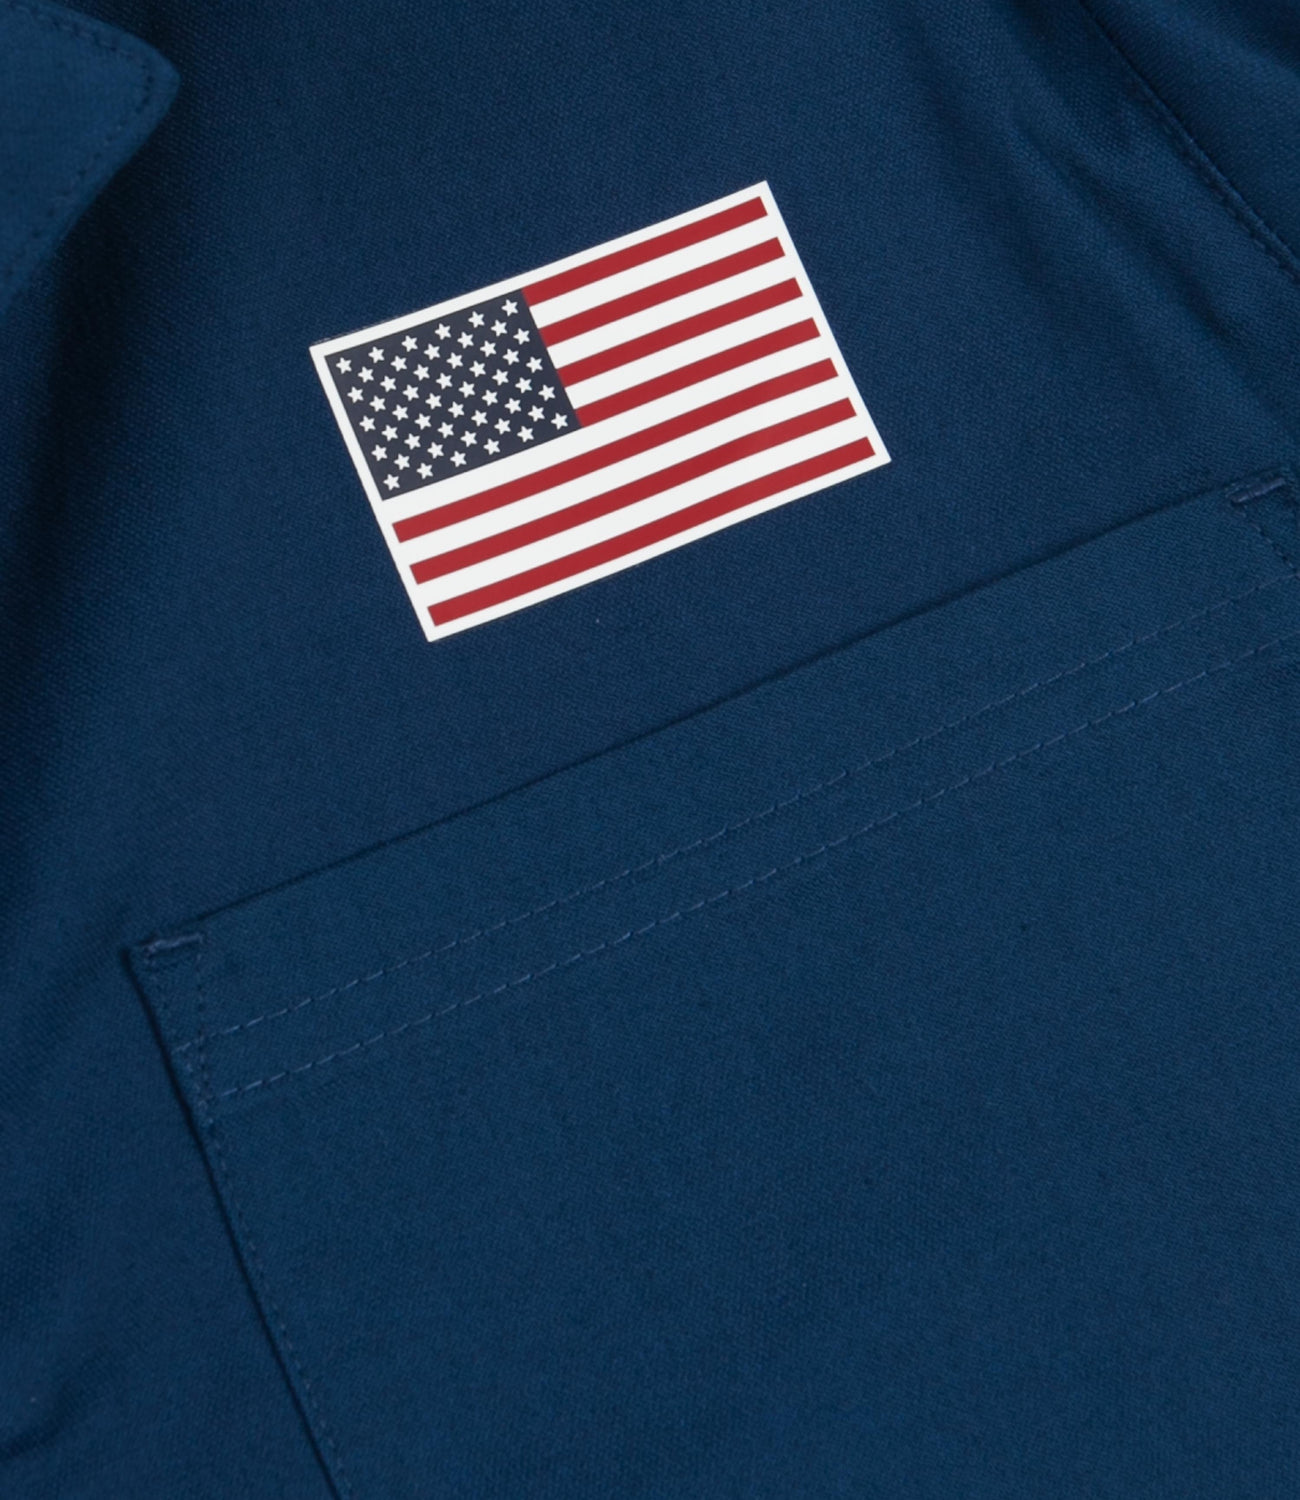 Nike SB x Parra 'USA Federation Kit' Coveralls - Brave Blue / White ...